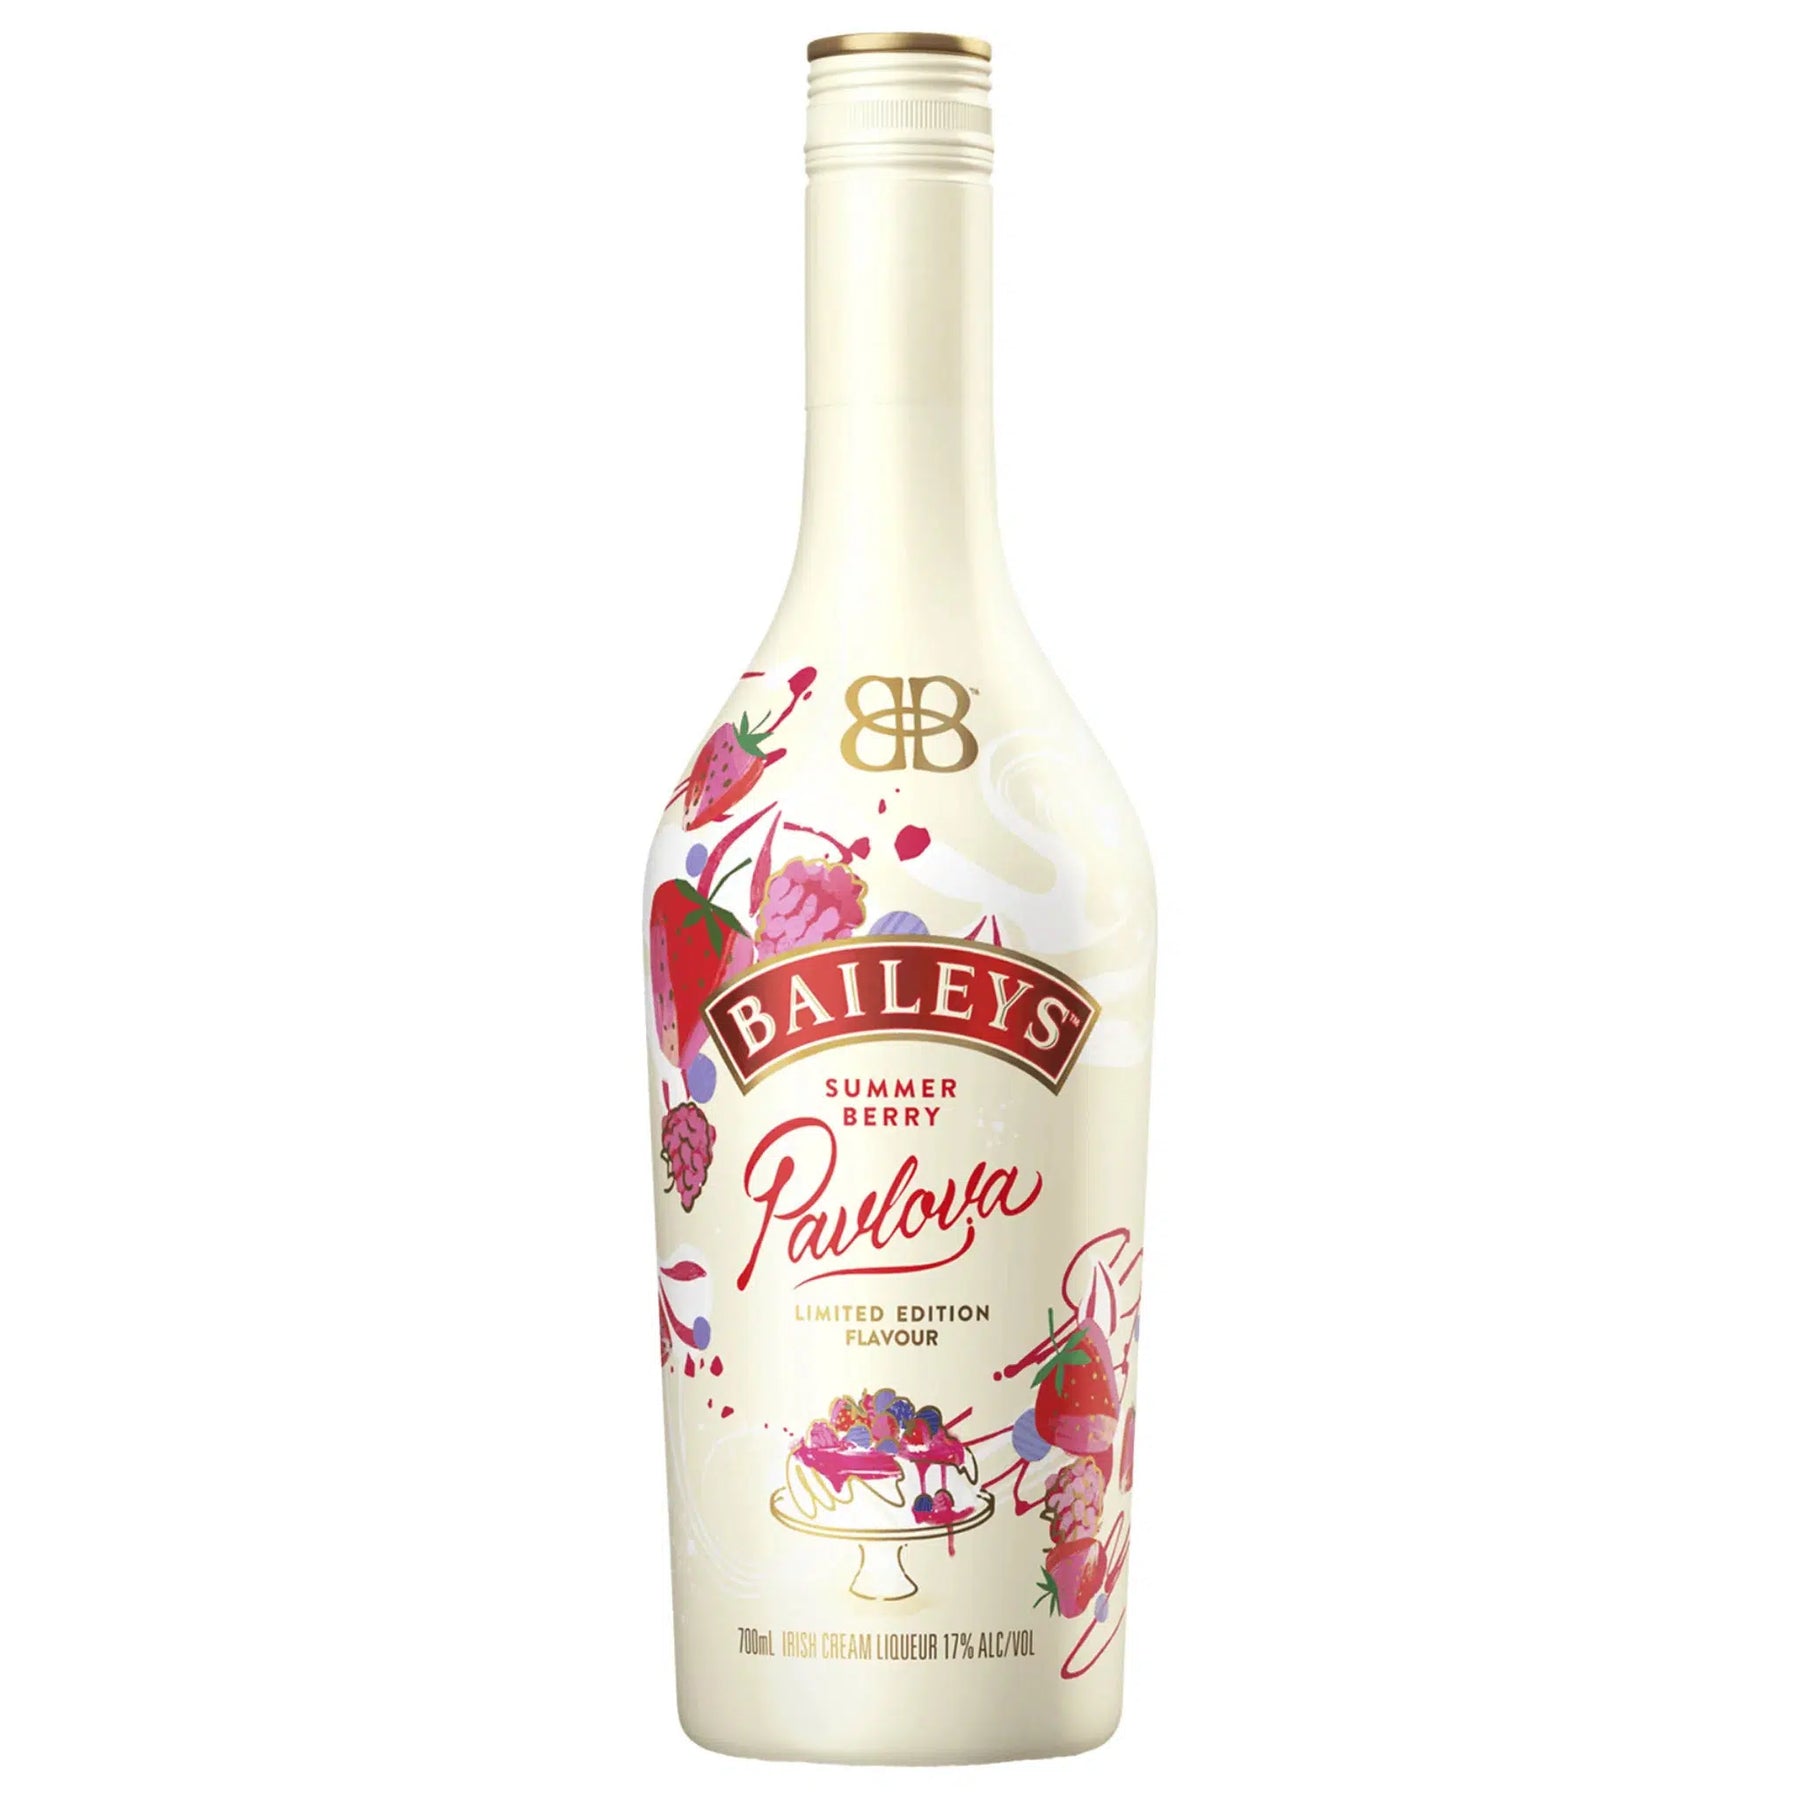 Baileys Pavlova Summer Berry Limited Edition 700ml